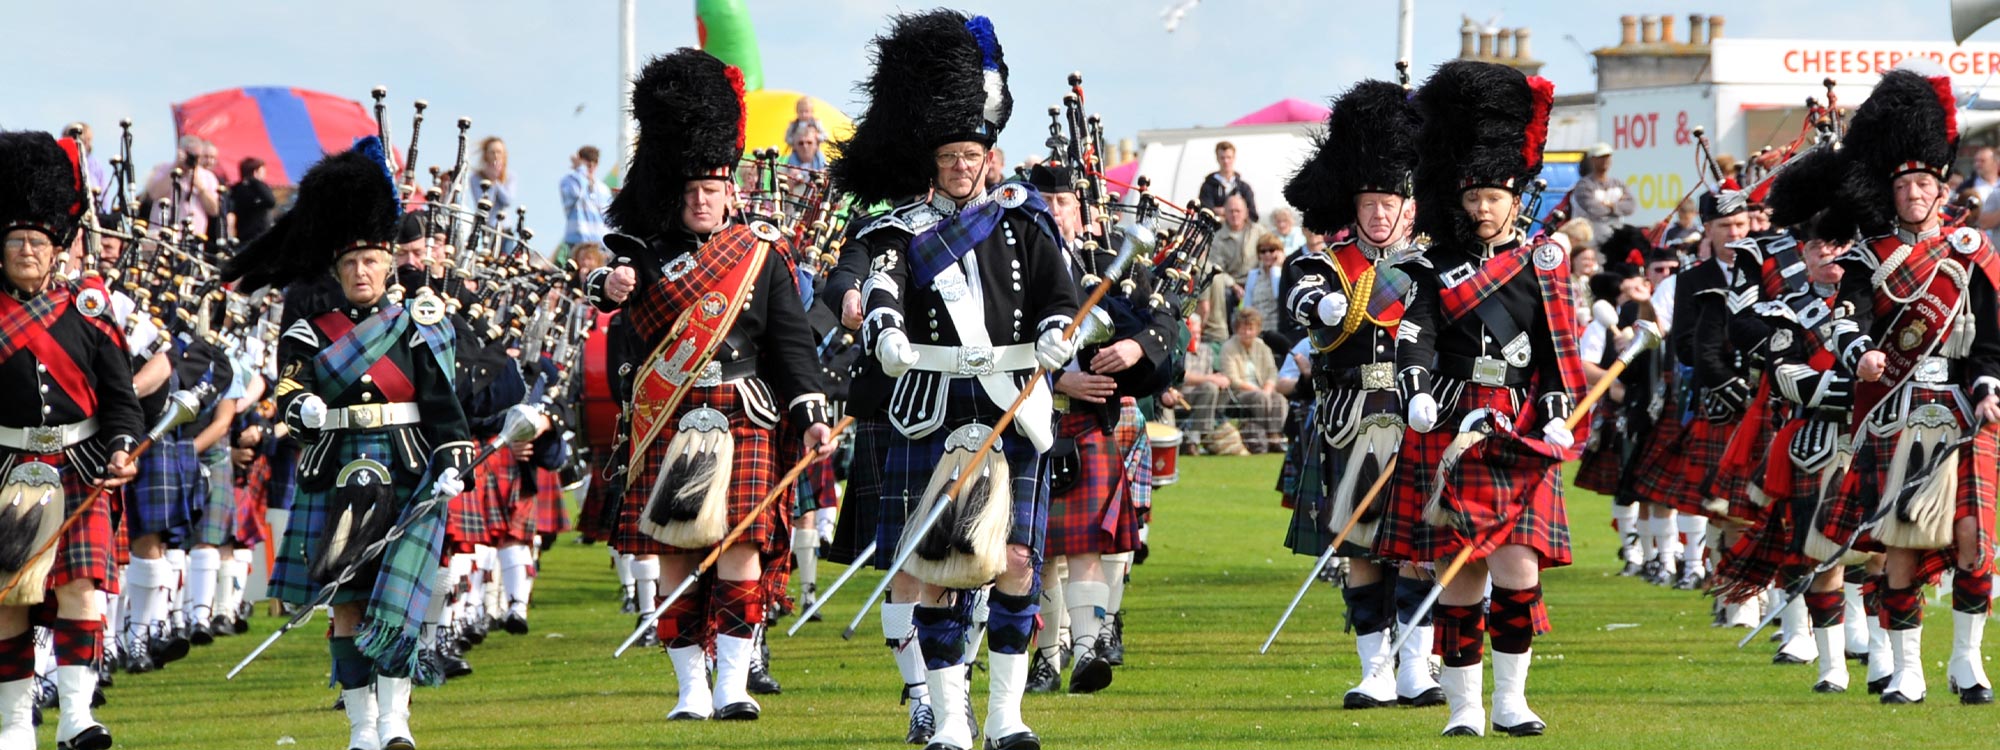 Schottlands Highland Games